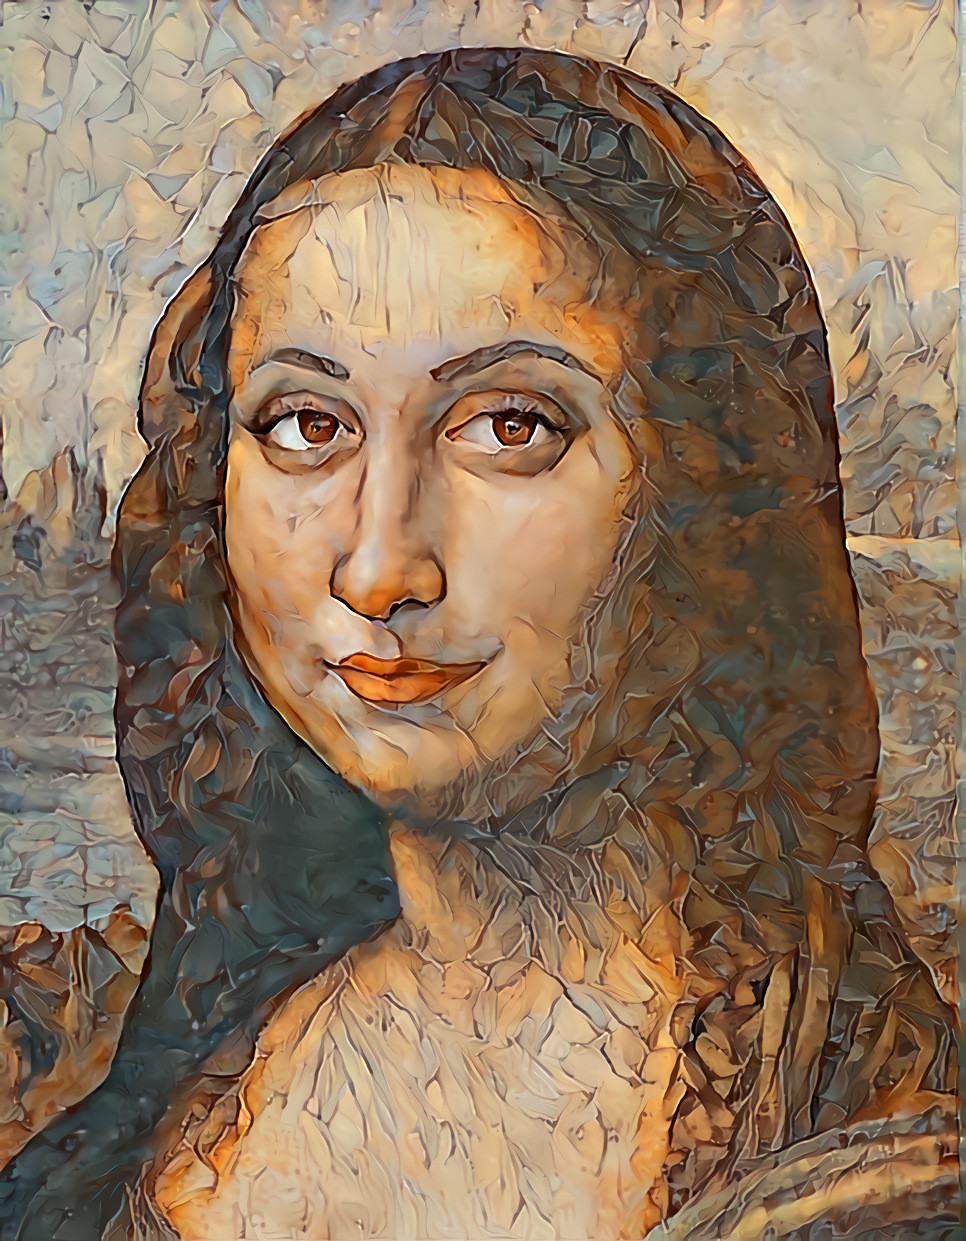 The Mona Lisa today